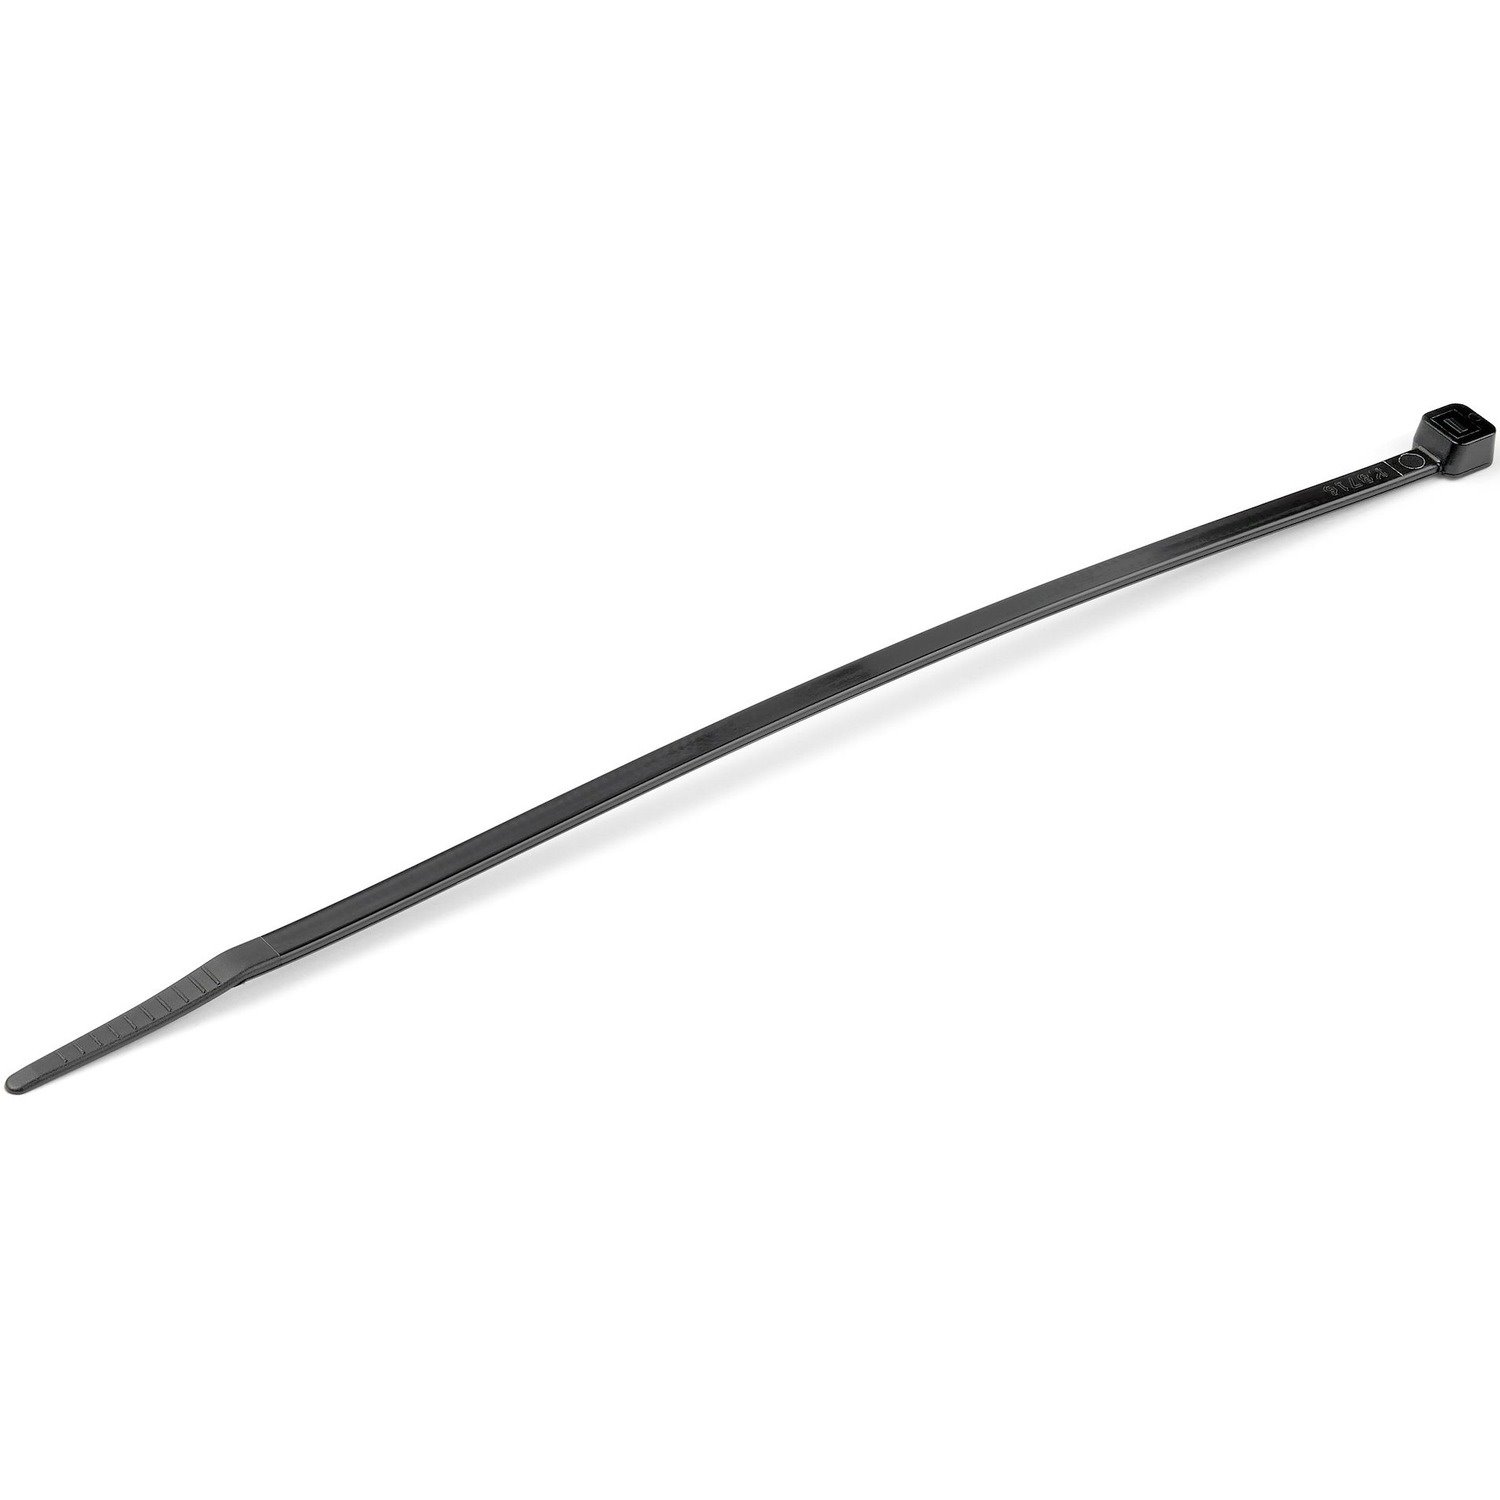 StarTech.com 8"(20cm) Cable Ties, 2-1/8"(55mm) Dia, 50lb(22kg) Tensile Strength, Nylon Self Locking Zip Ties, UL Listed, 100 Pack, Black